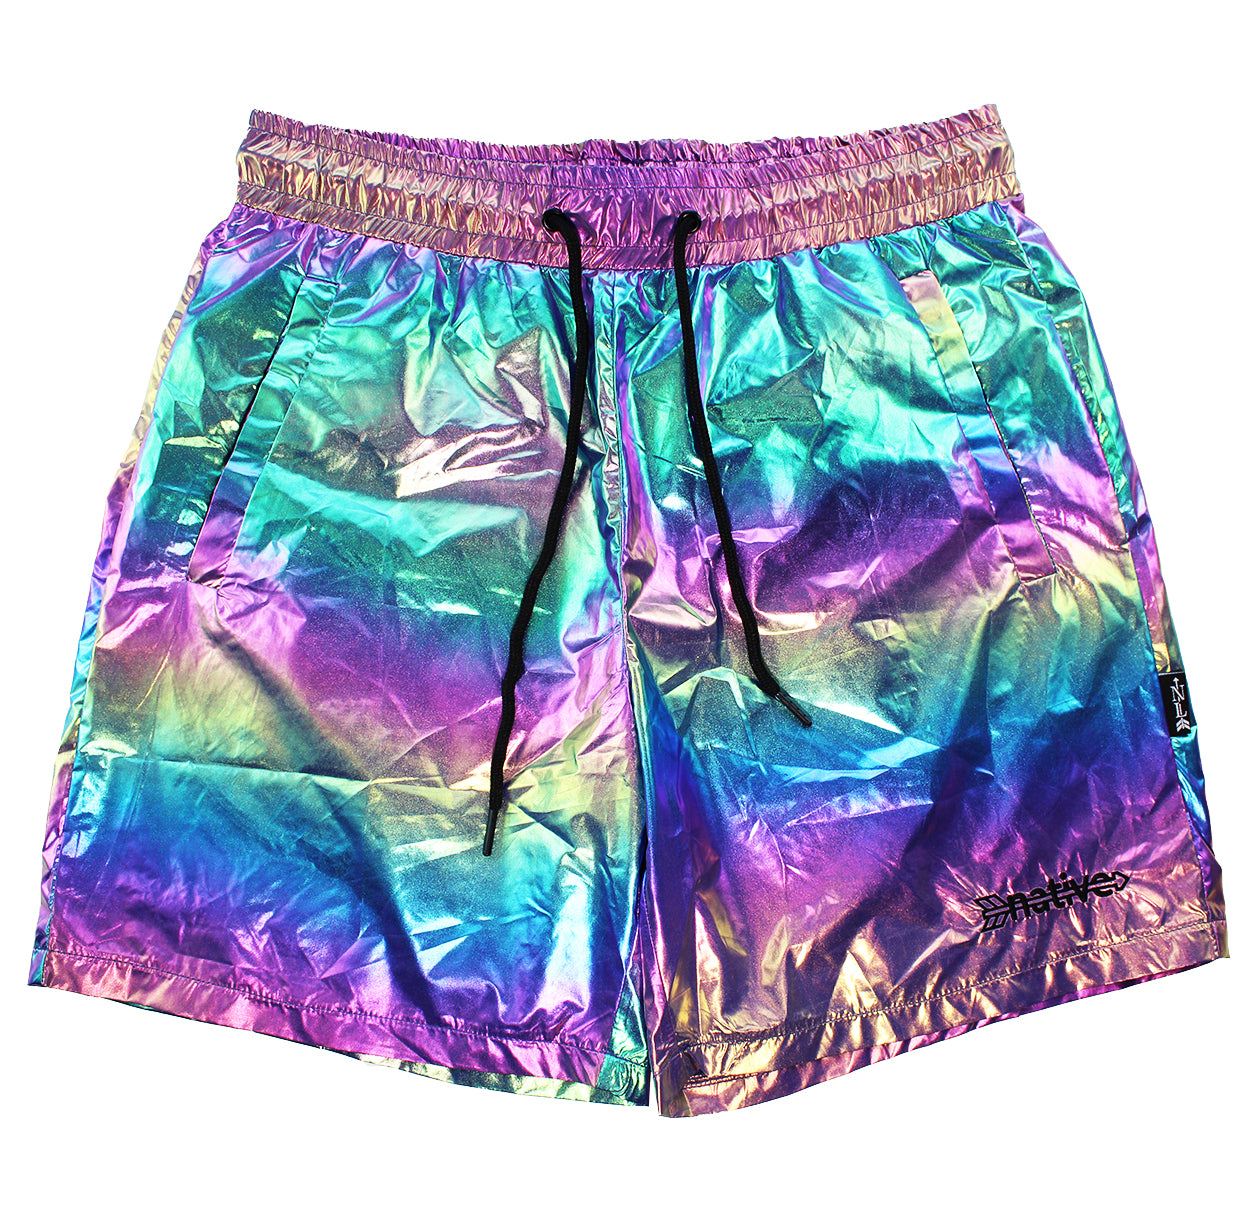 iridescent shorts in purple